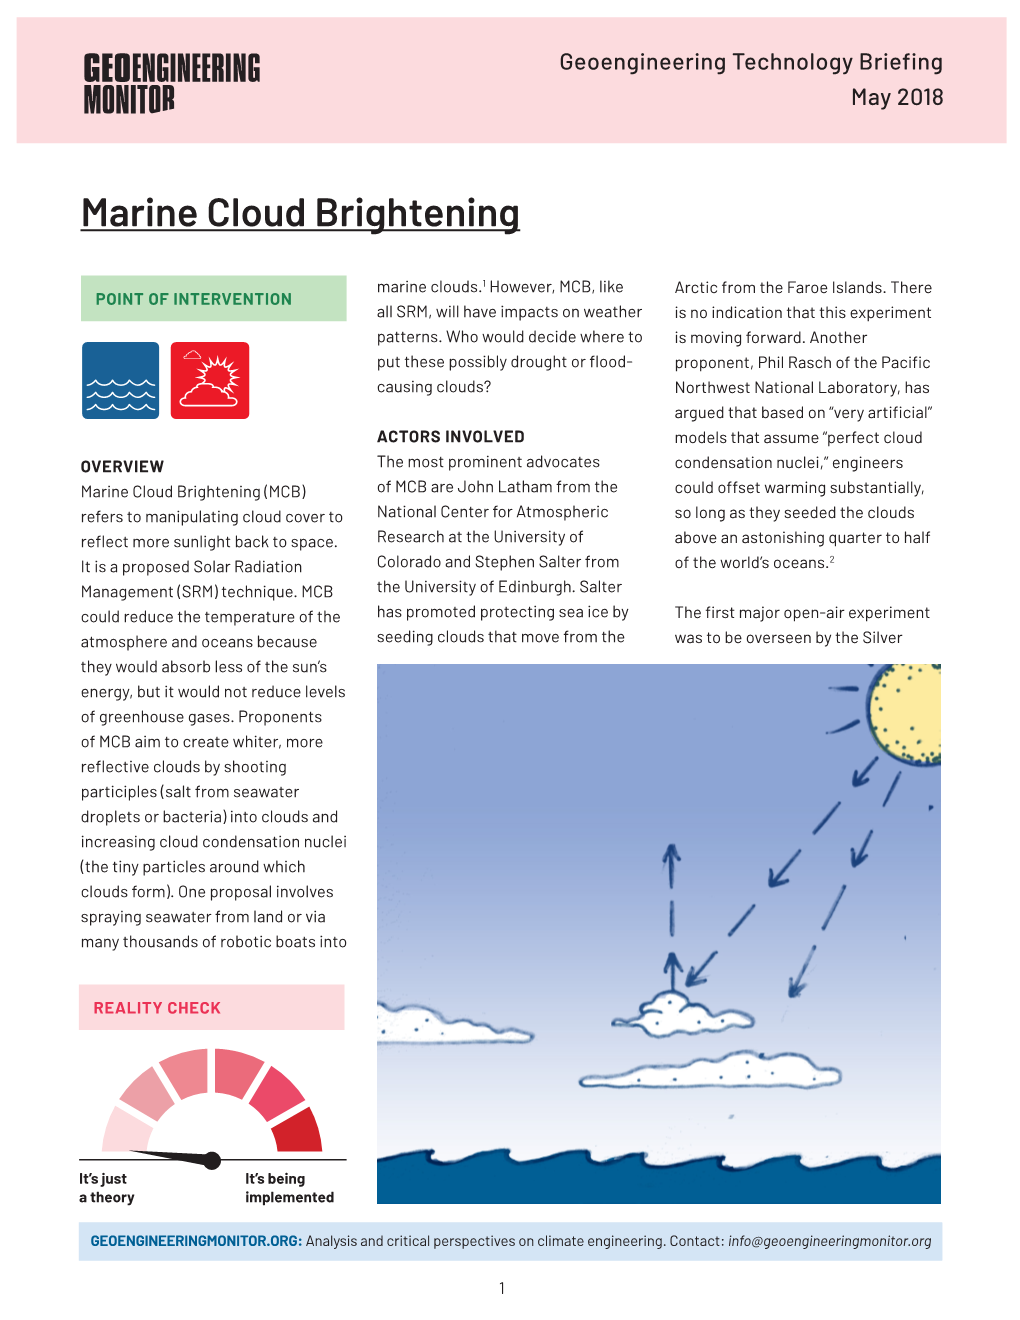 Marine Cloud Brightening